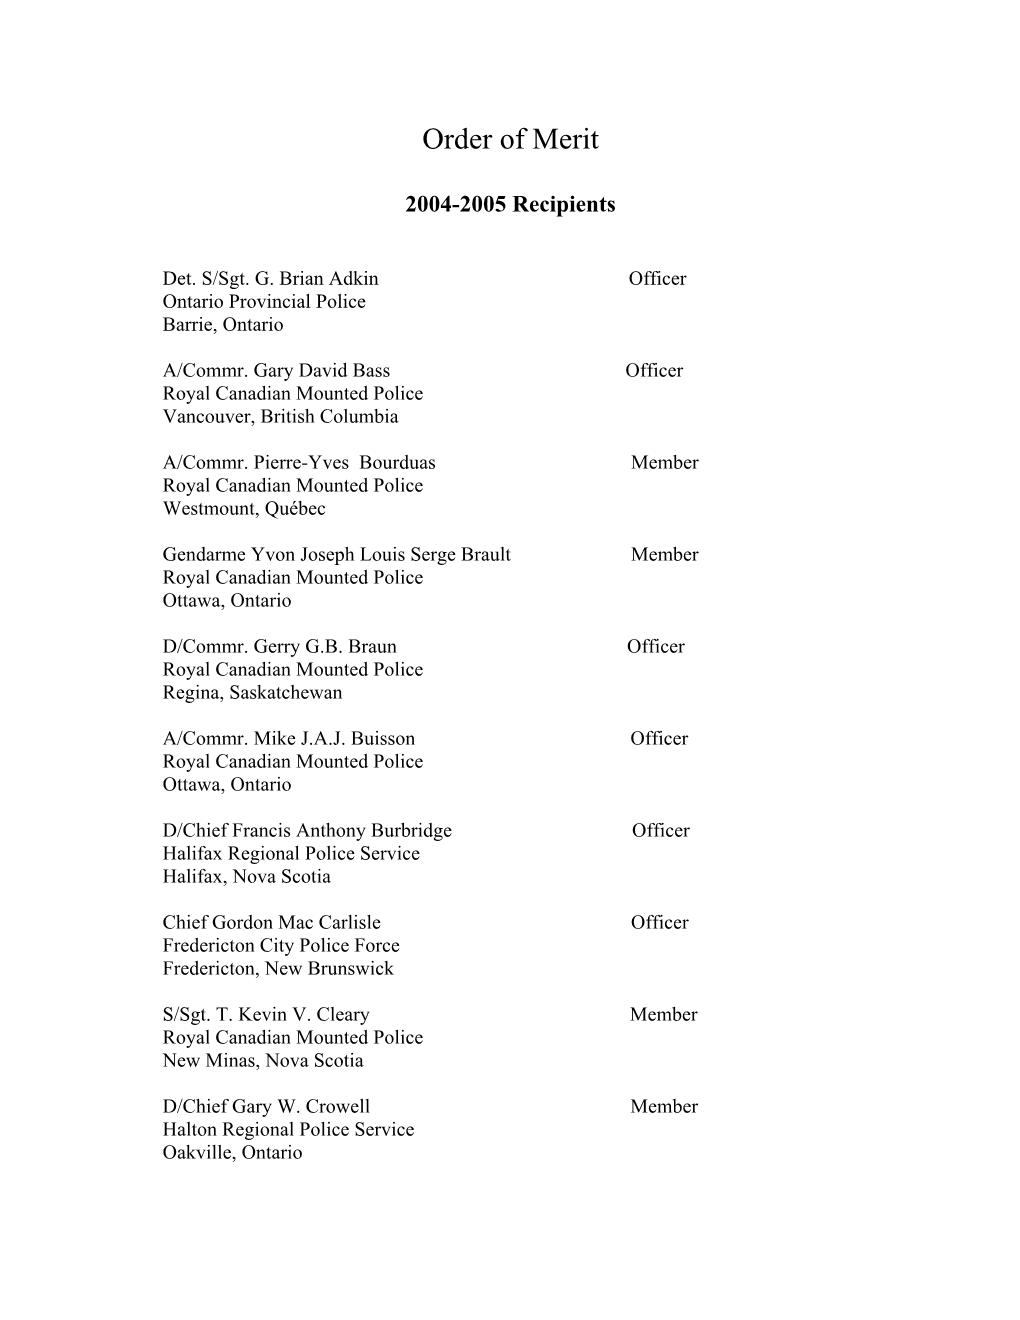 Order of Merit List of Recipients 2004-2005